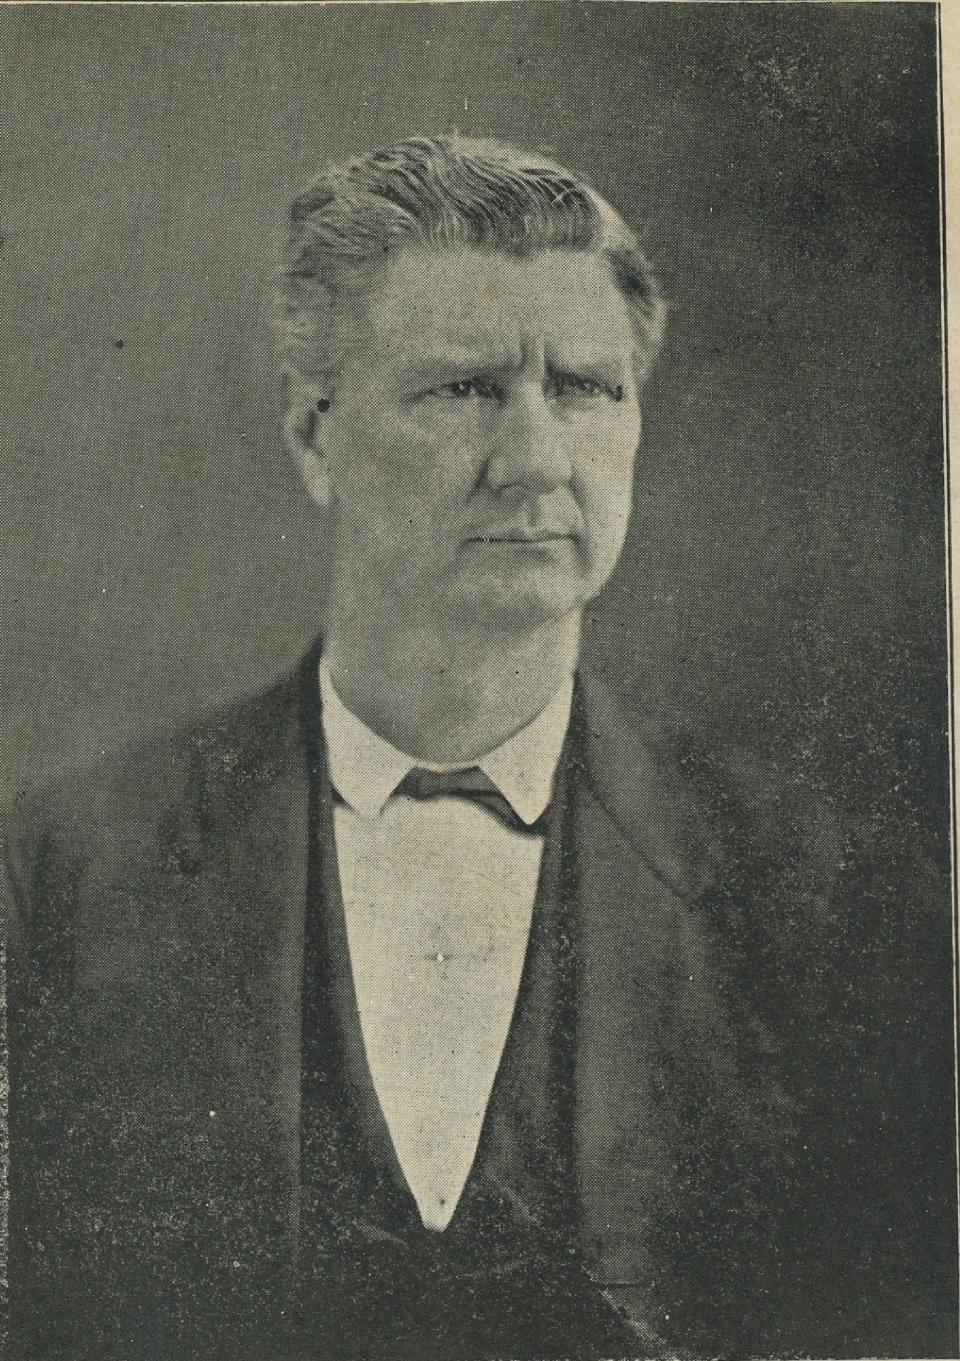 Elder Frank M. Jordan, Baptist preacher, from his 1899 memoir, "Life and Labors of Elder F.M. Jordan"